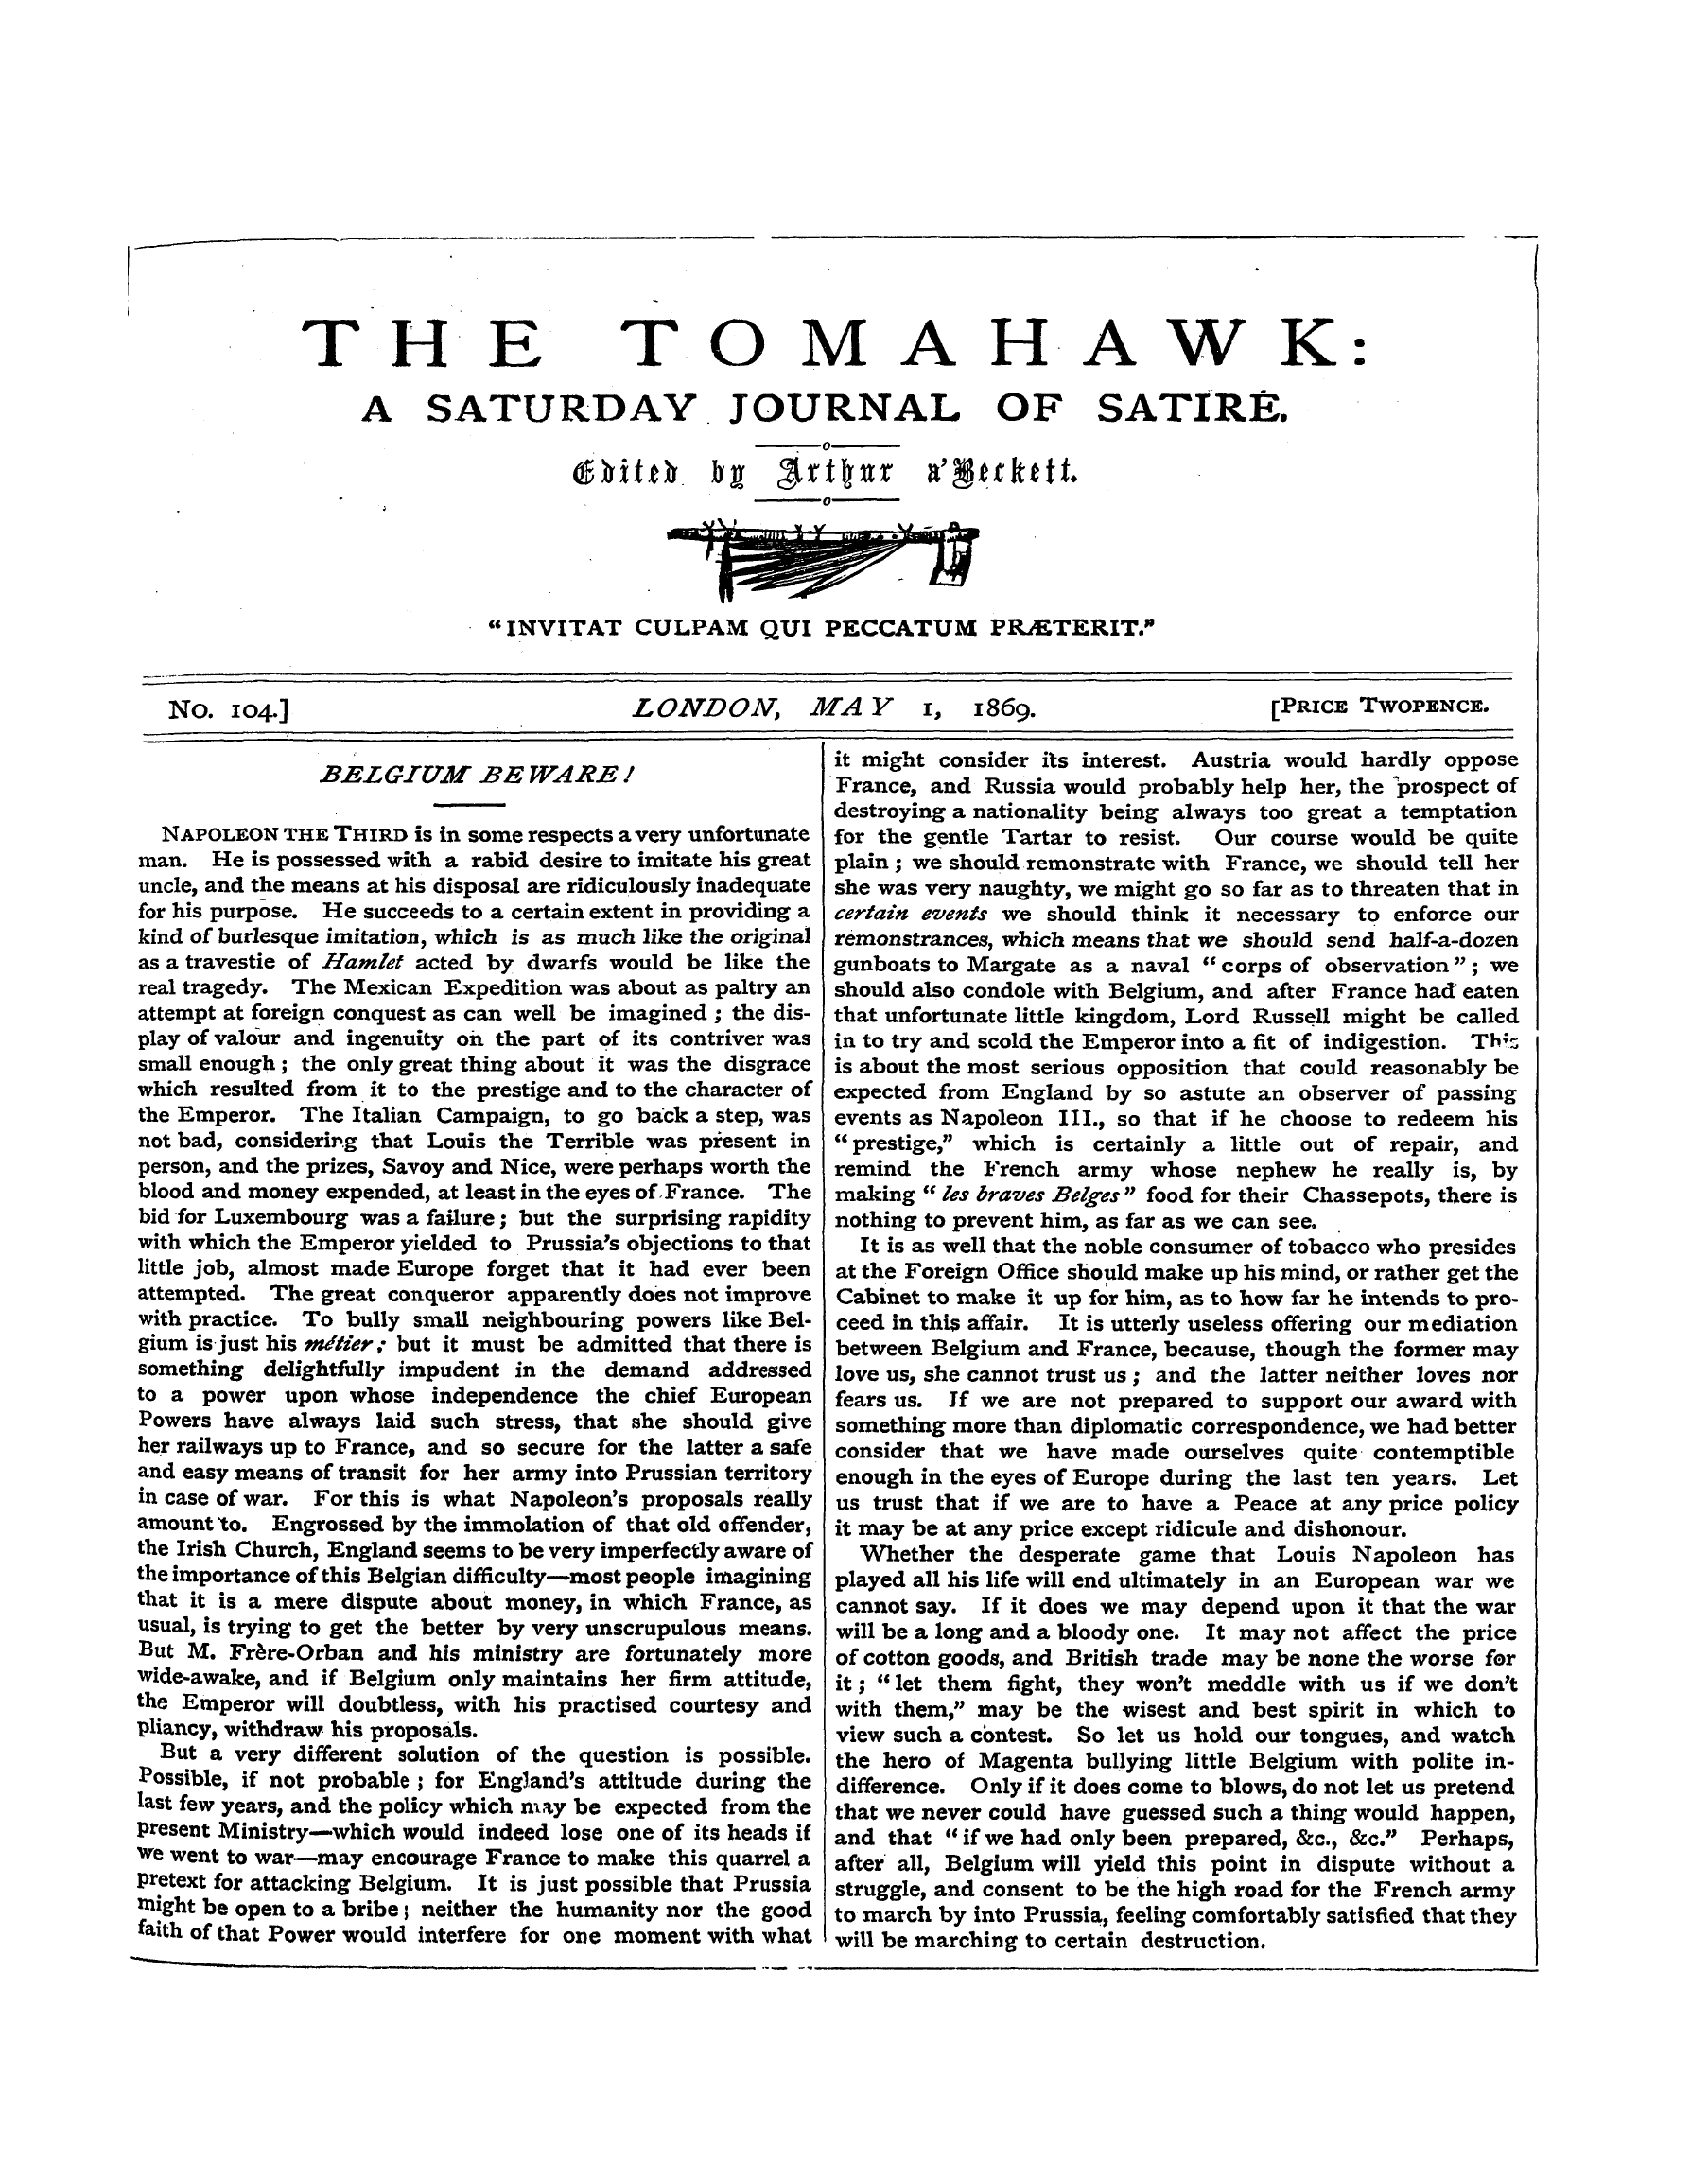 Tomahawk (1867-1870): jS F Y, 1st edition - No. 104.] London, Ma Y 1, 186 9. [Price ...